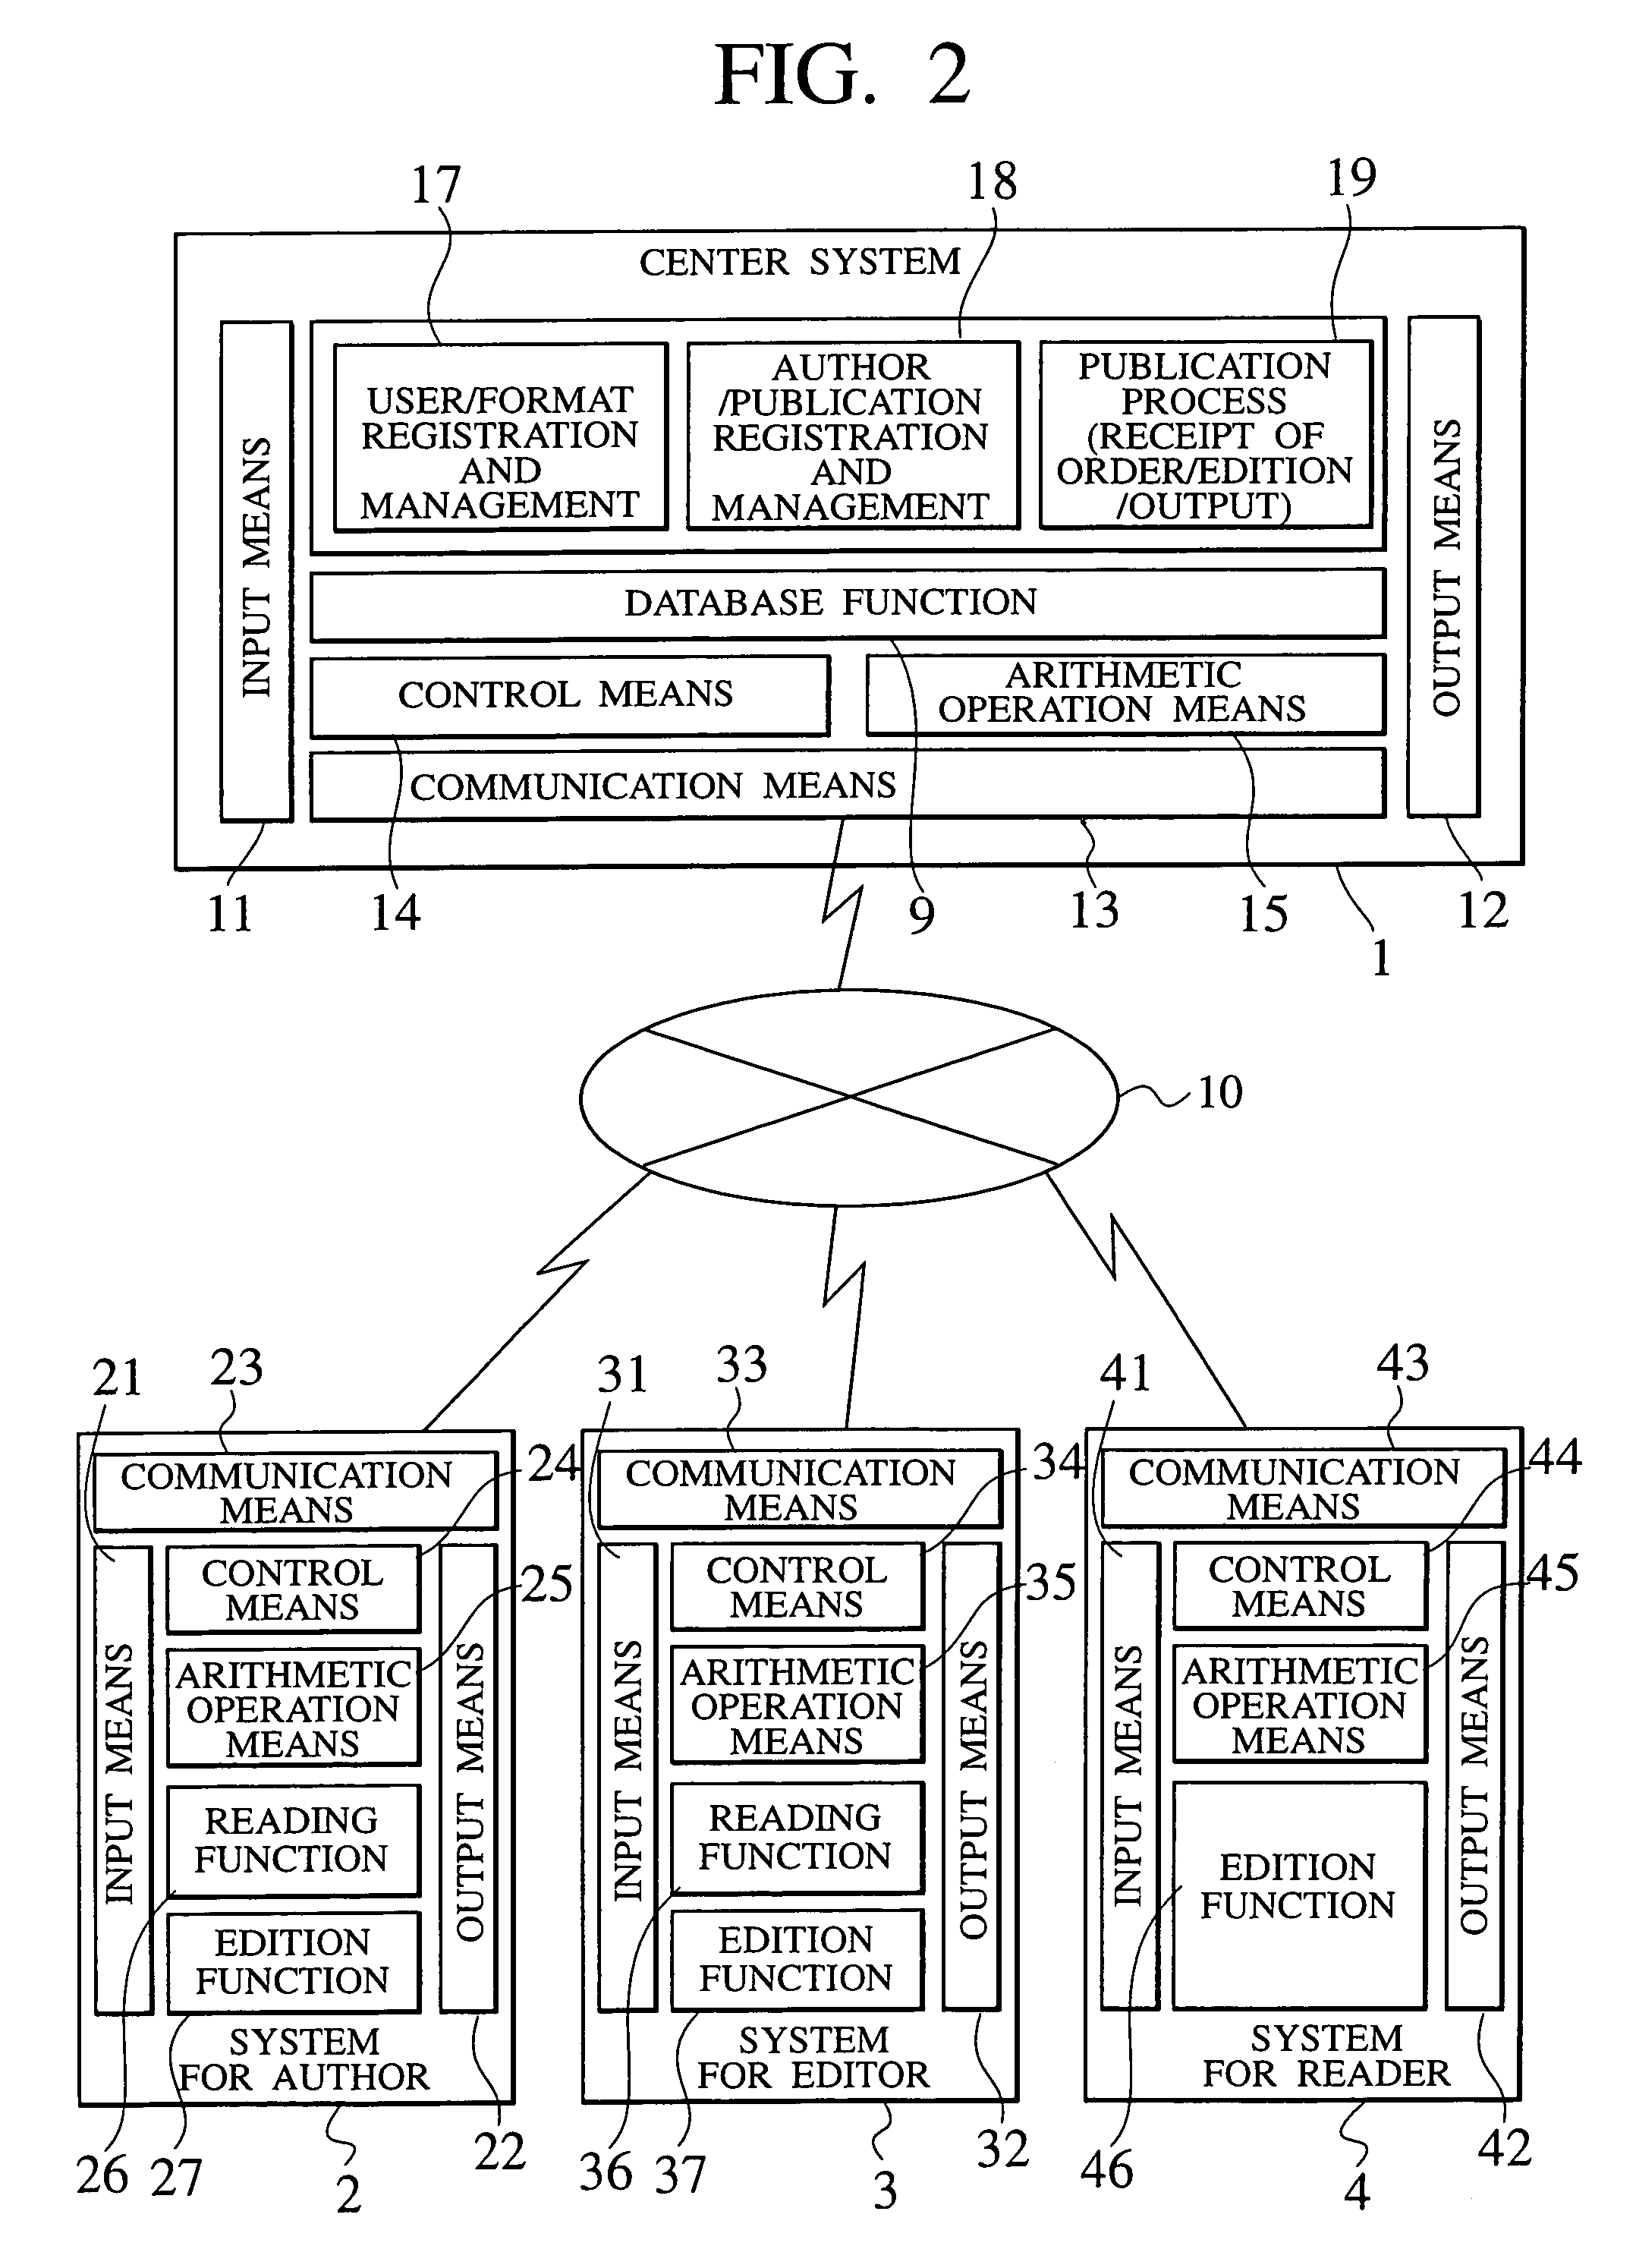 Electronic publication system